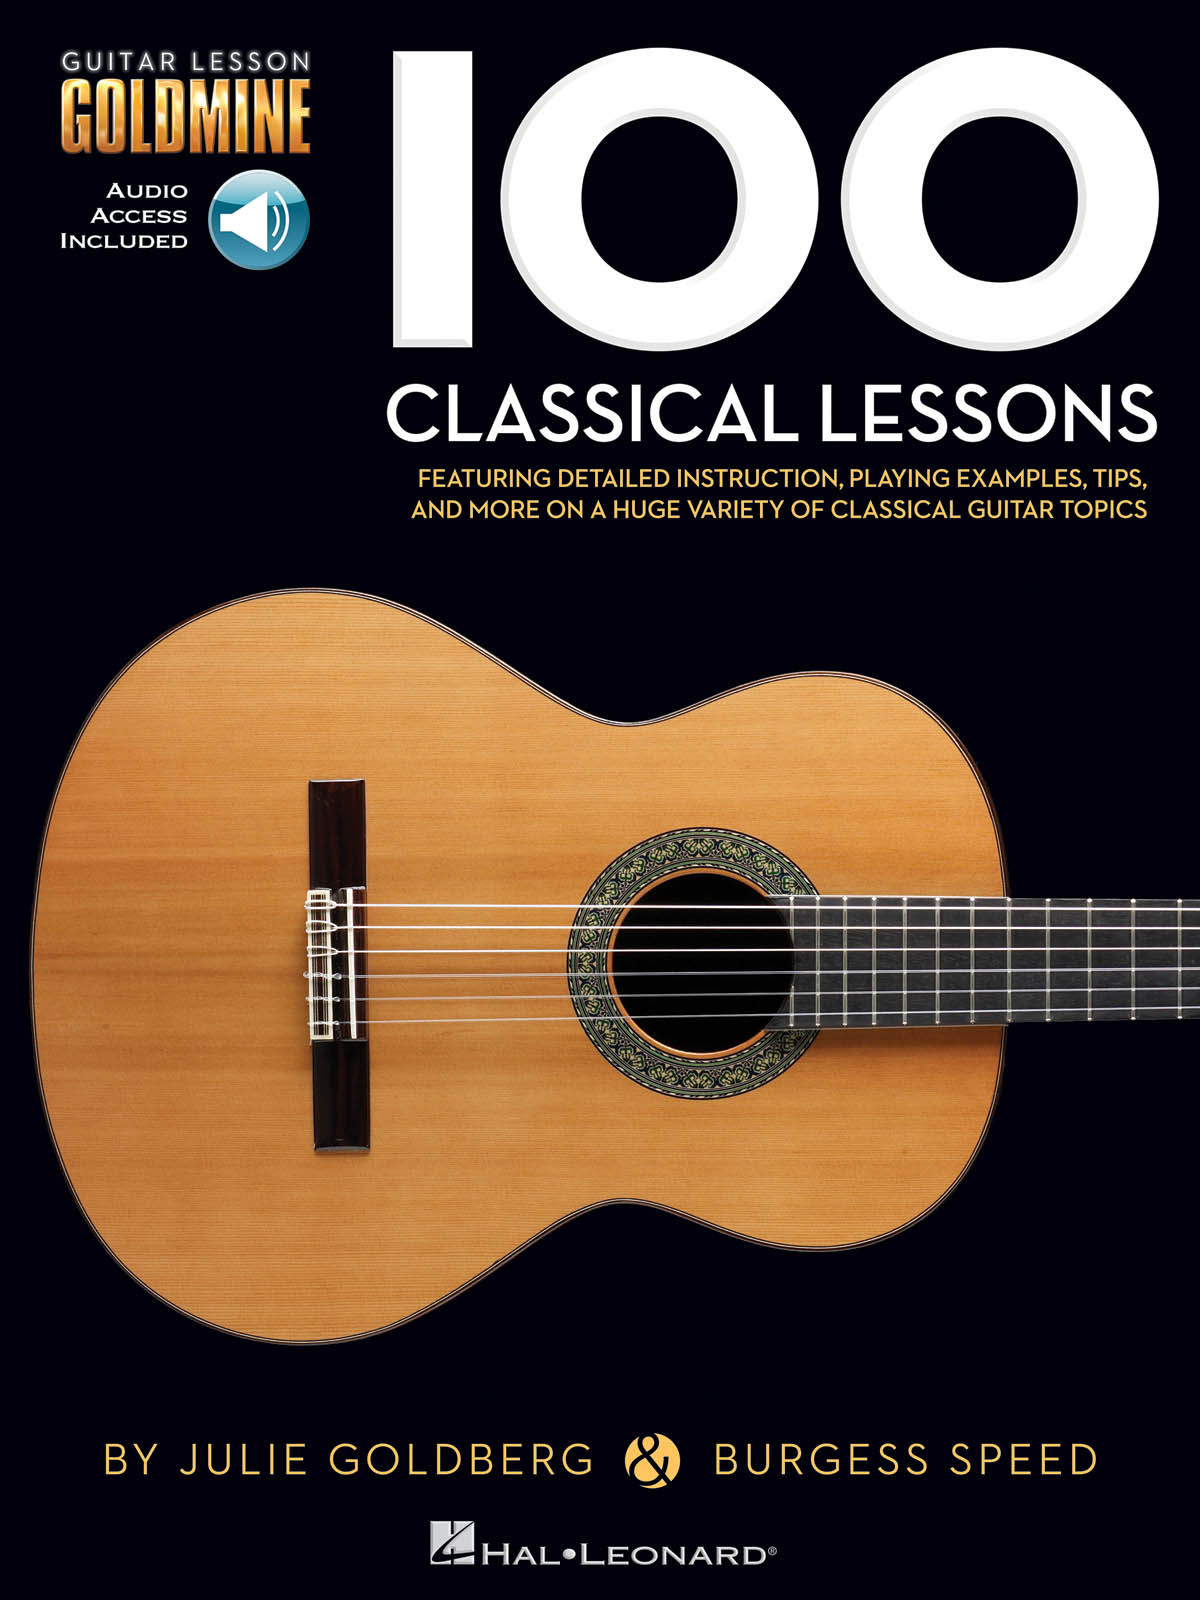 100 Classical Lessons - Guitar Lesson Goldmine Series - pro kytaru